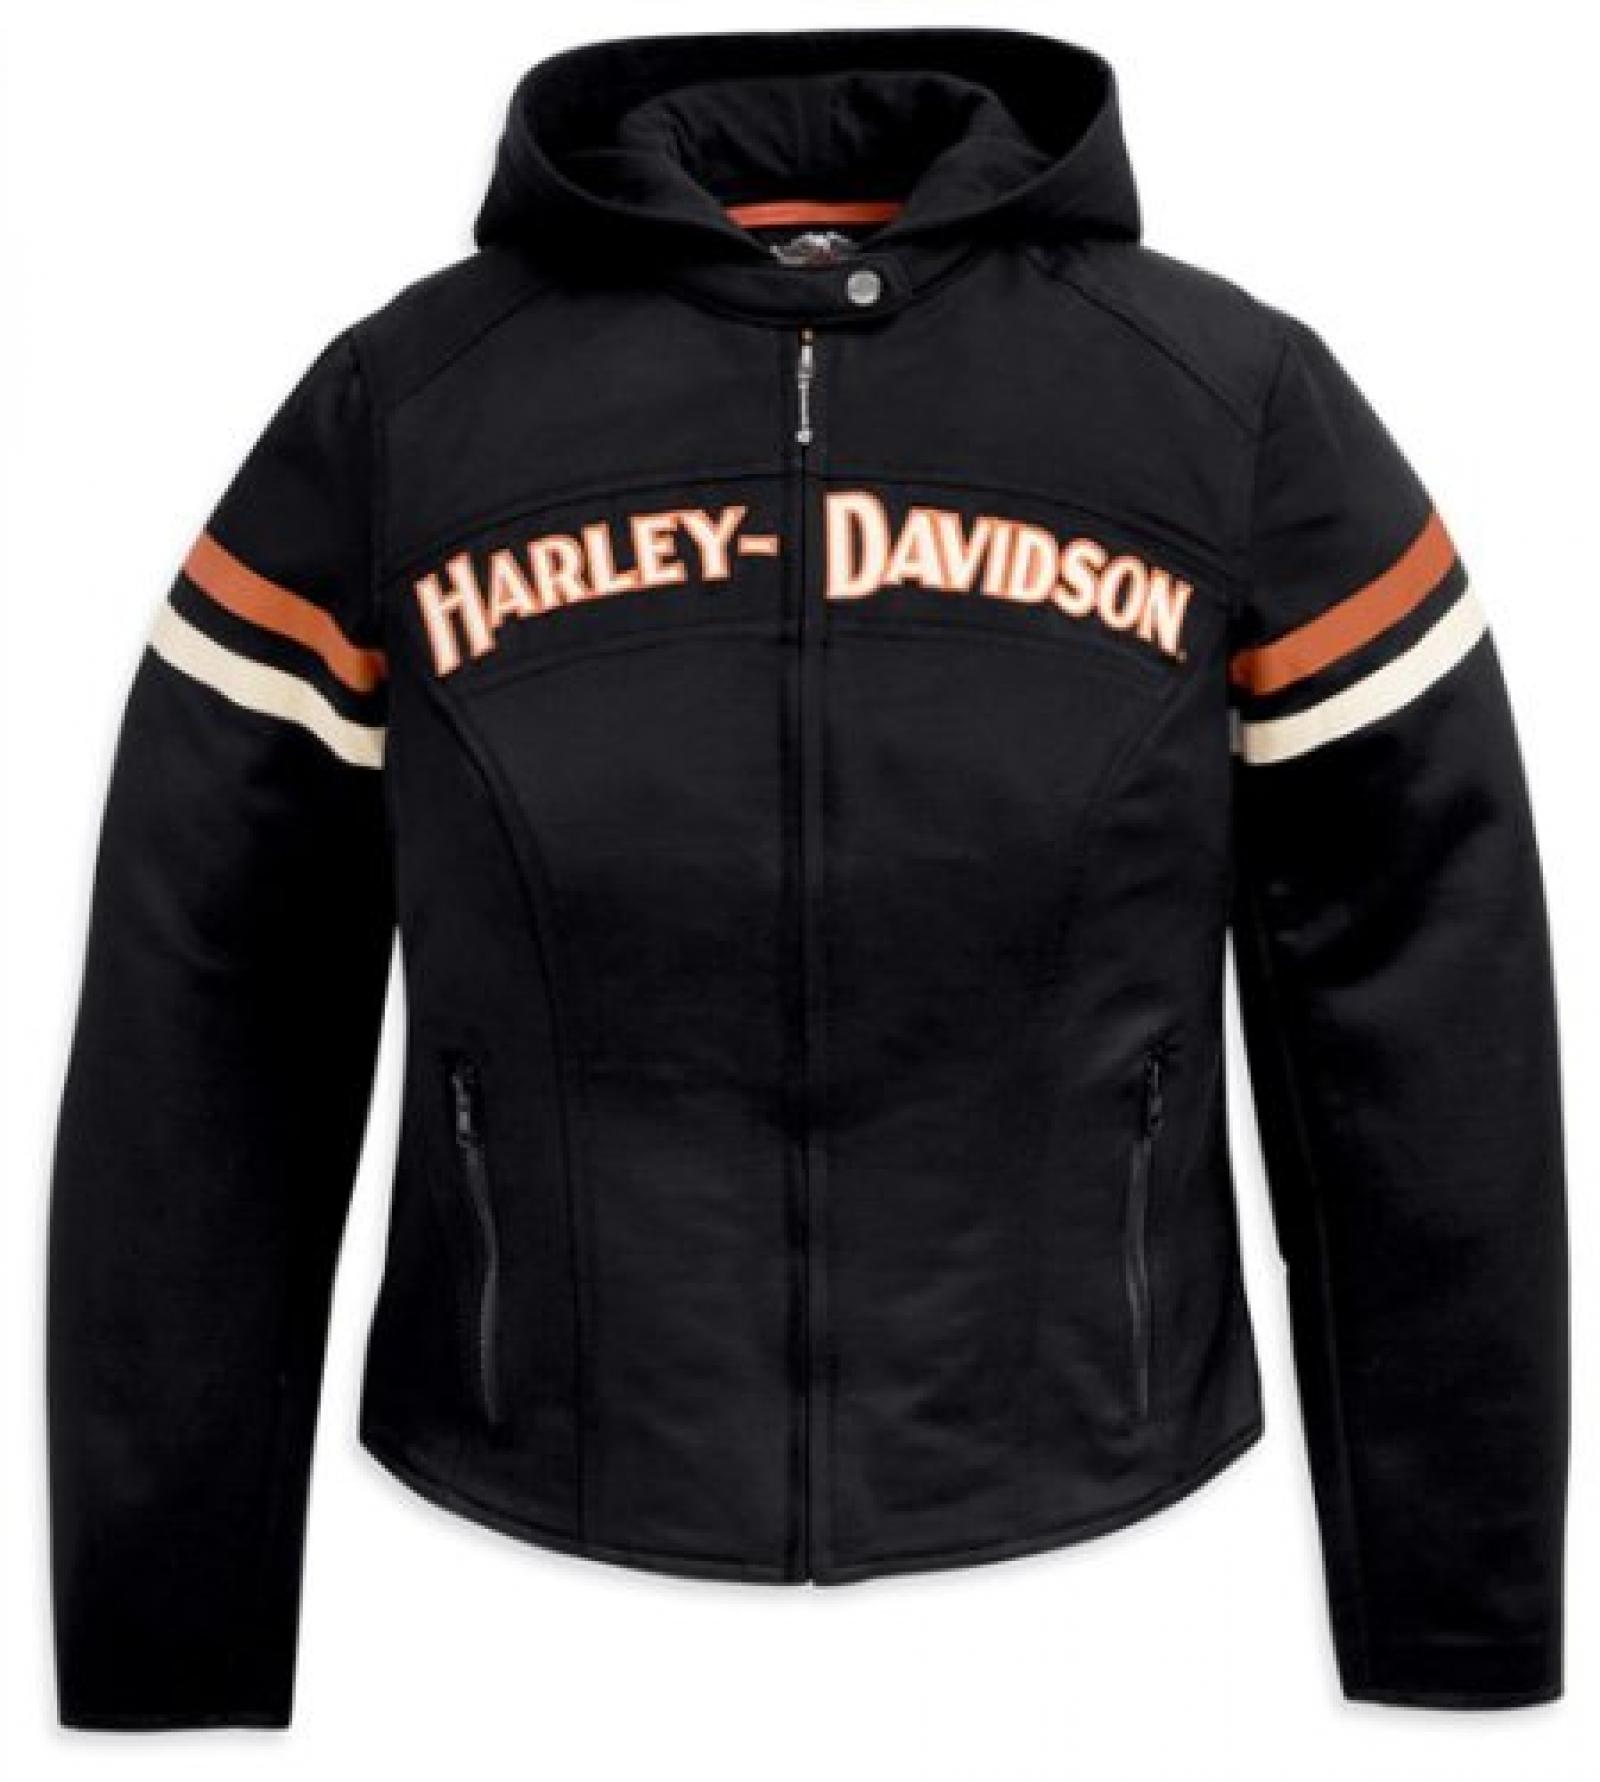 Harley-Davidson Miss Enthusiast 3-in-1 Outerwear Jacket 98499-11VW Damen Outerwear 